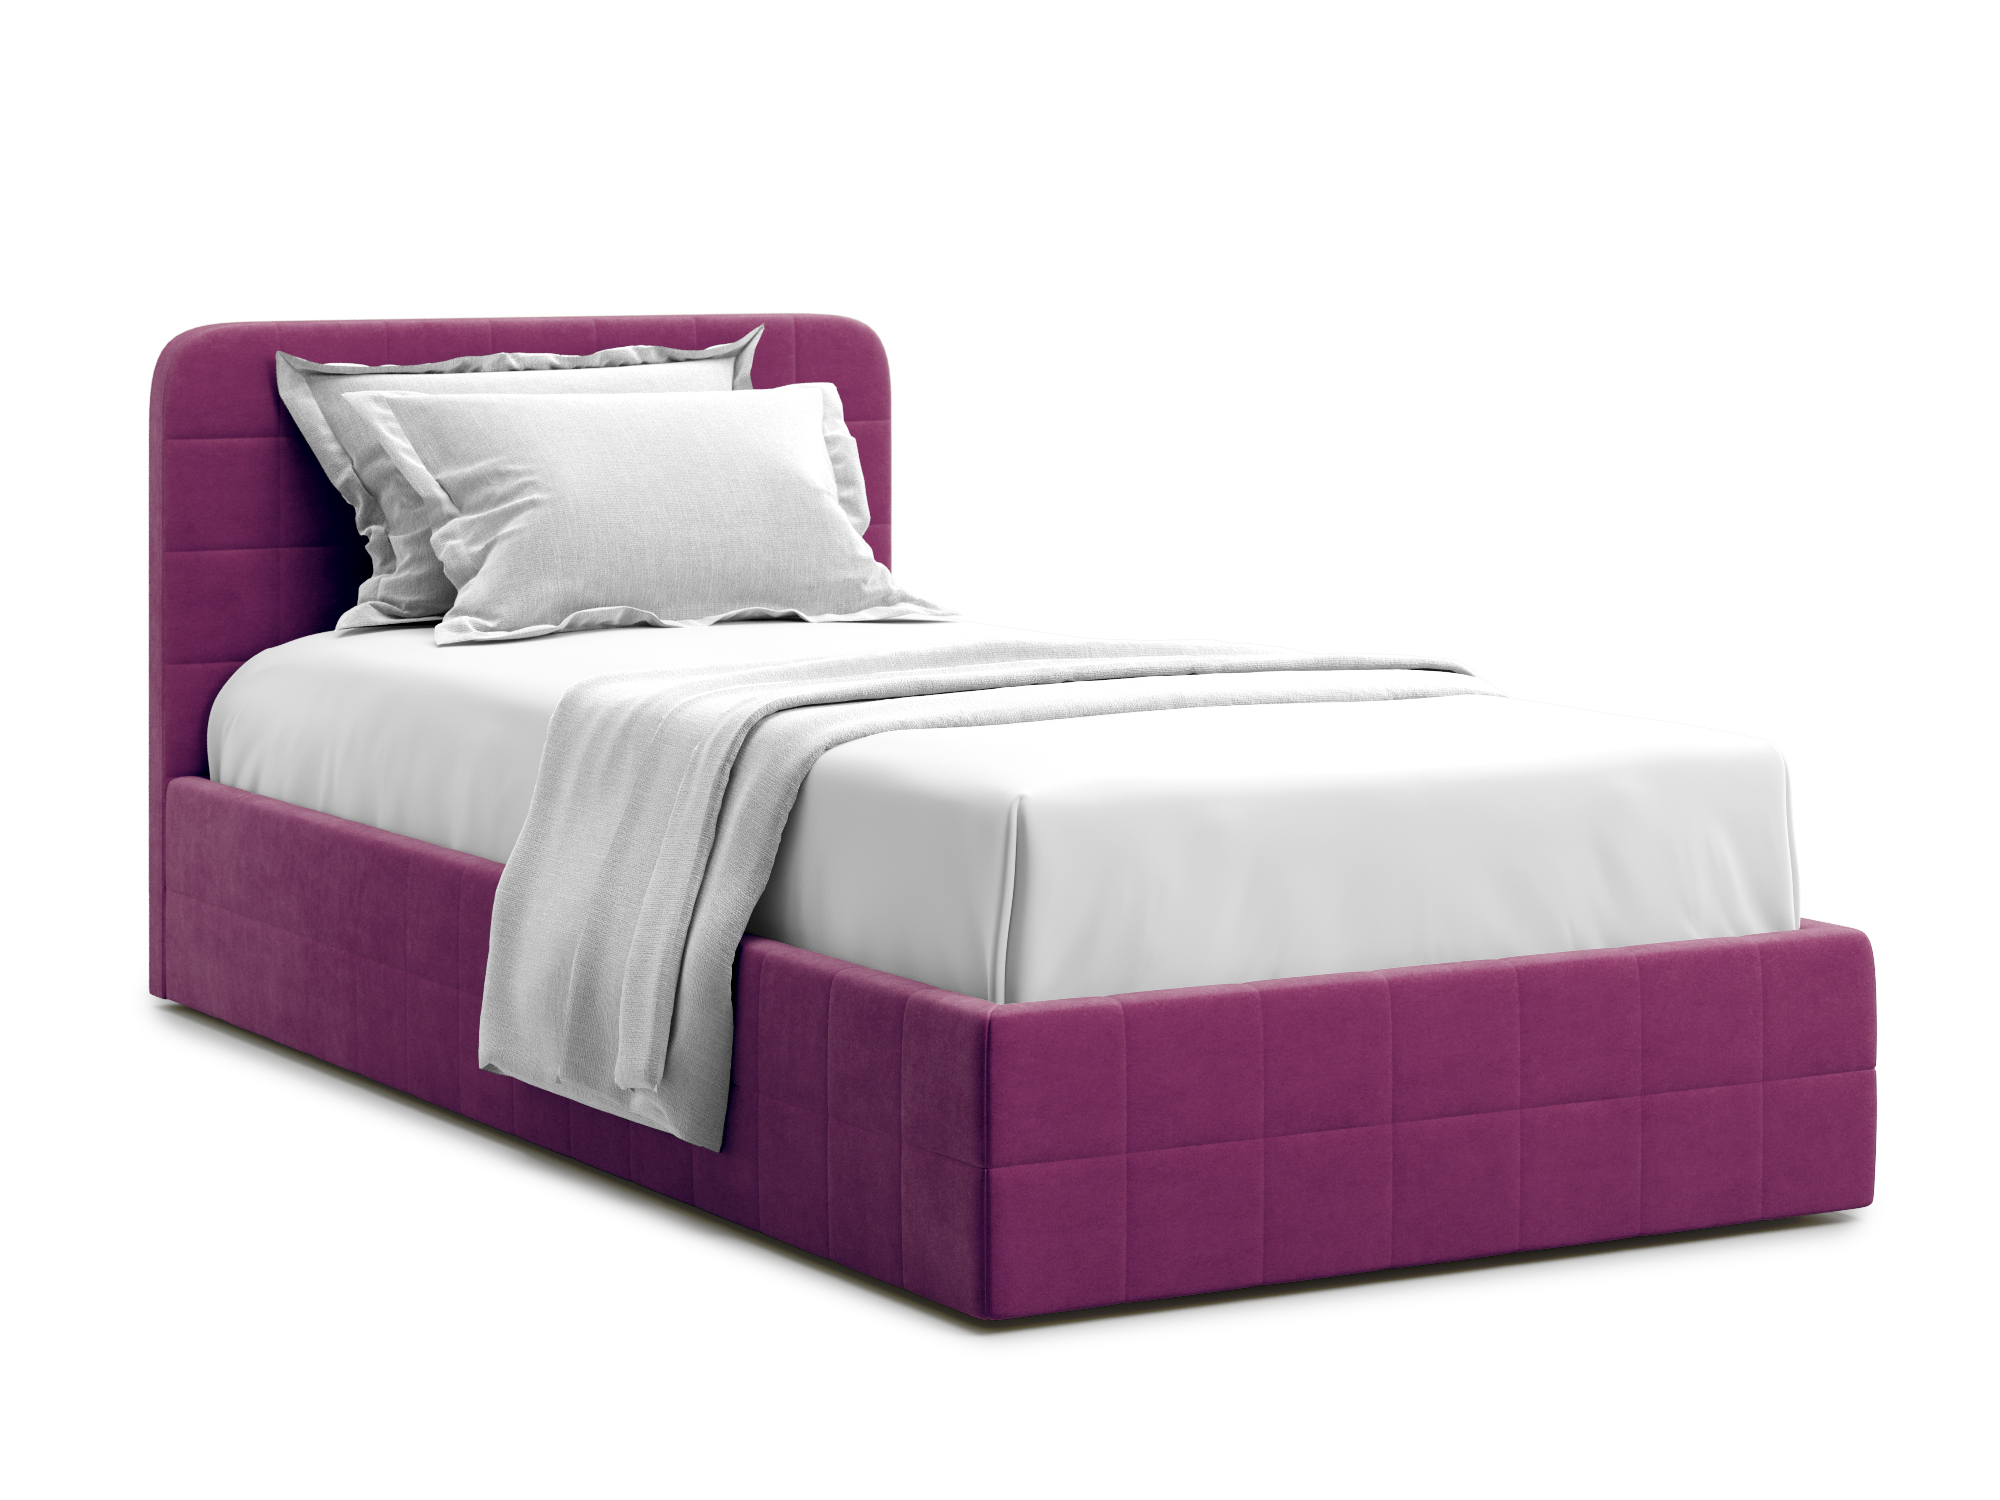 Кровать Adda 90 Velutto 15 Фиолетовый, Массив, ДСП кровать adda 120 velutto 27 оранжевый массив дсп